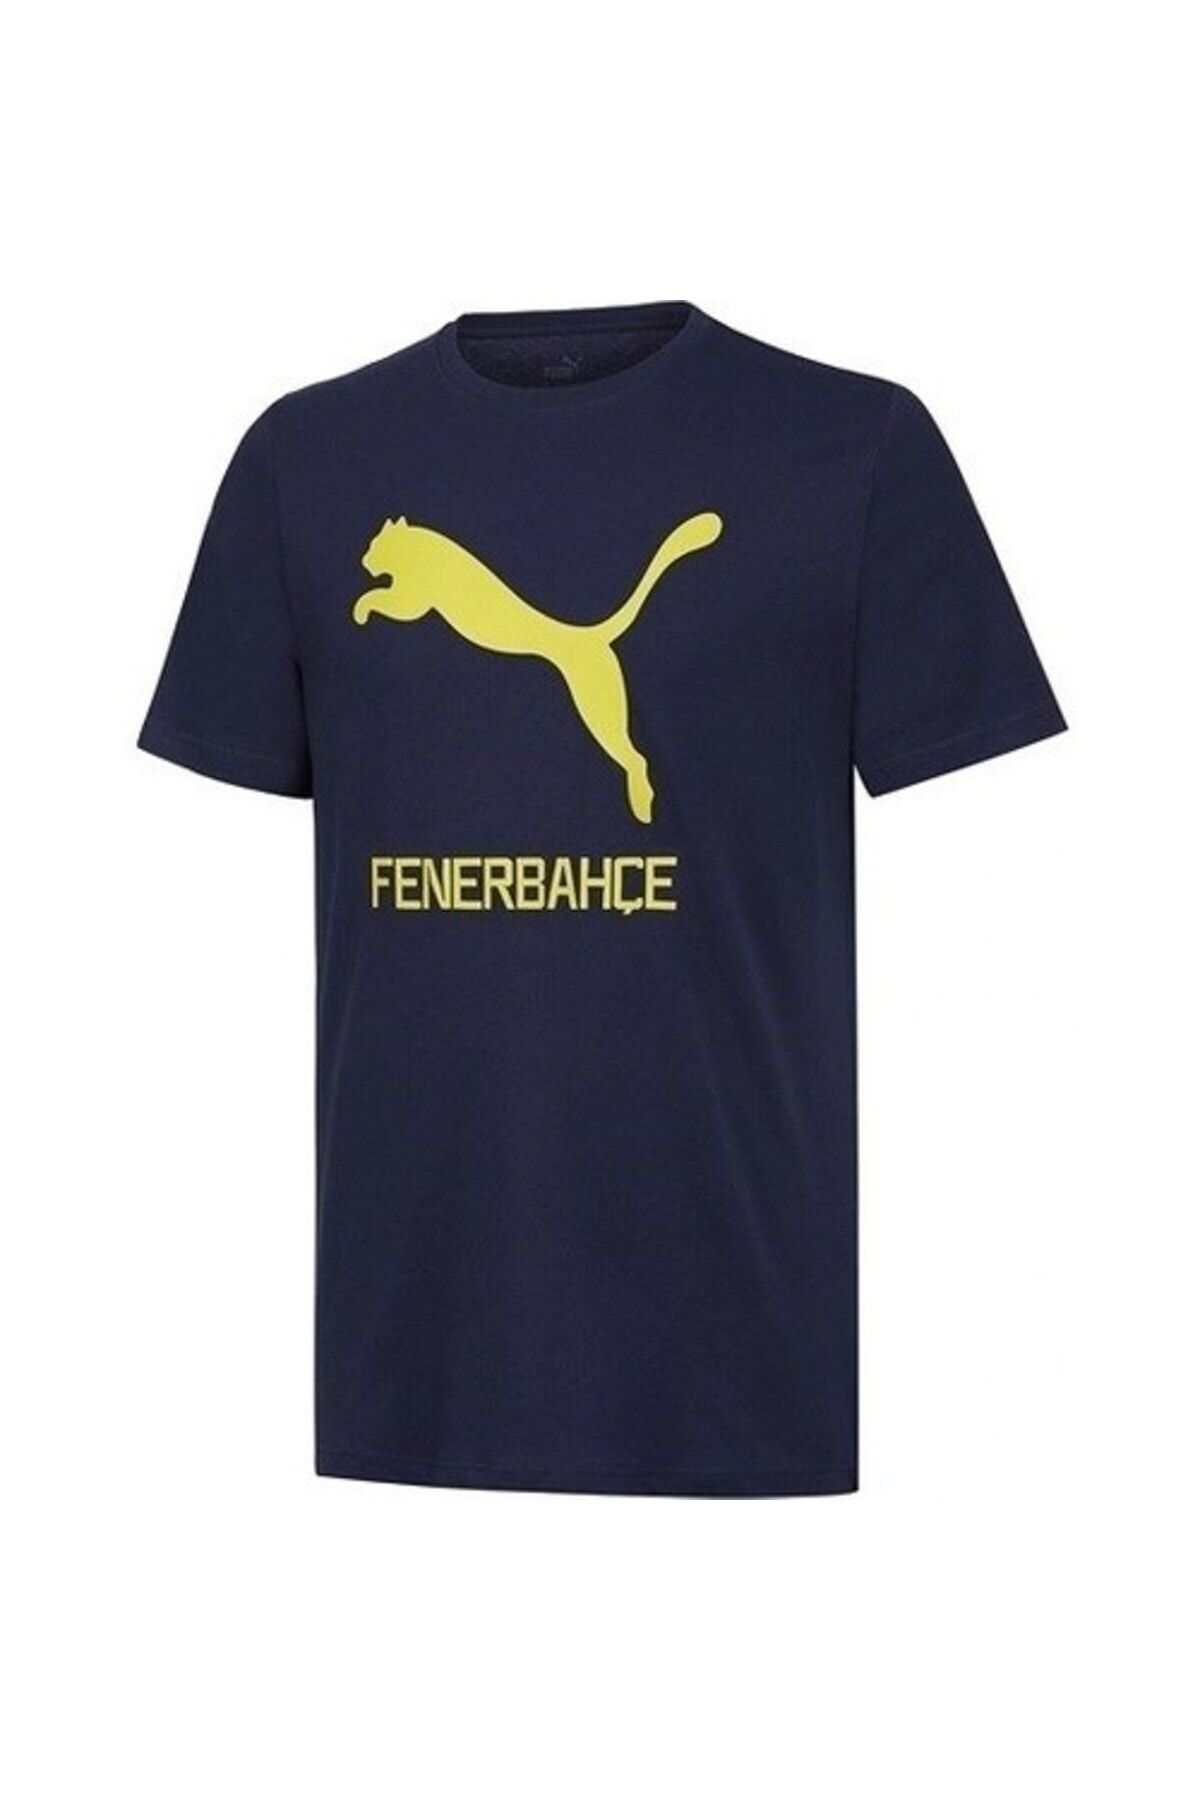 Puma Fenerbahçe Cat Tee Erkek Fenerbahçe Futbol Tişörtü